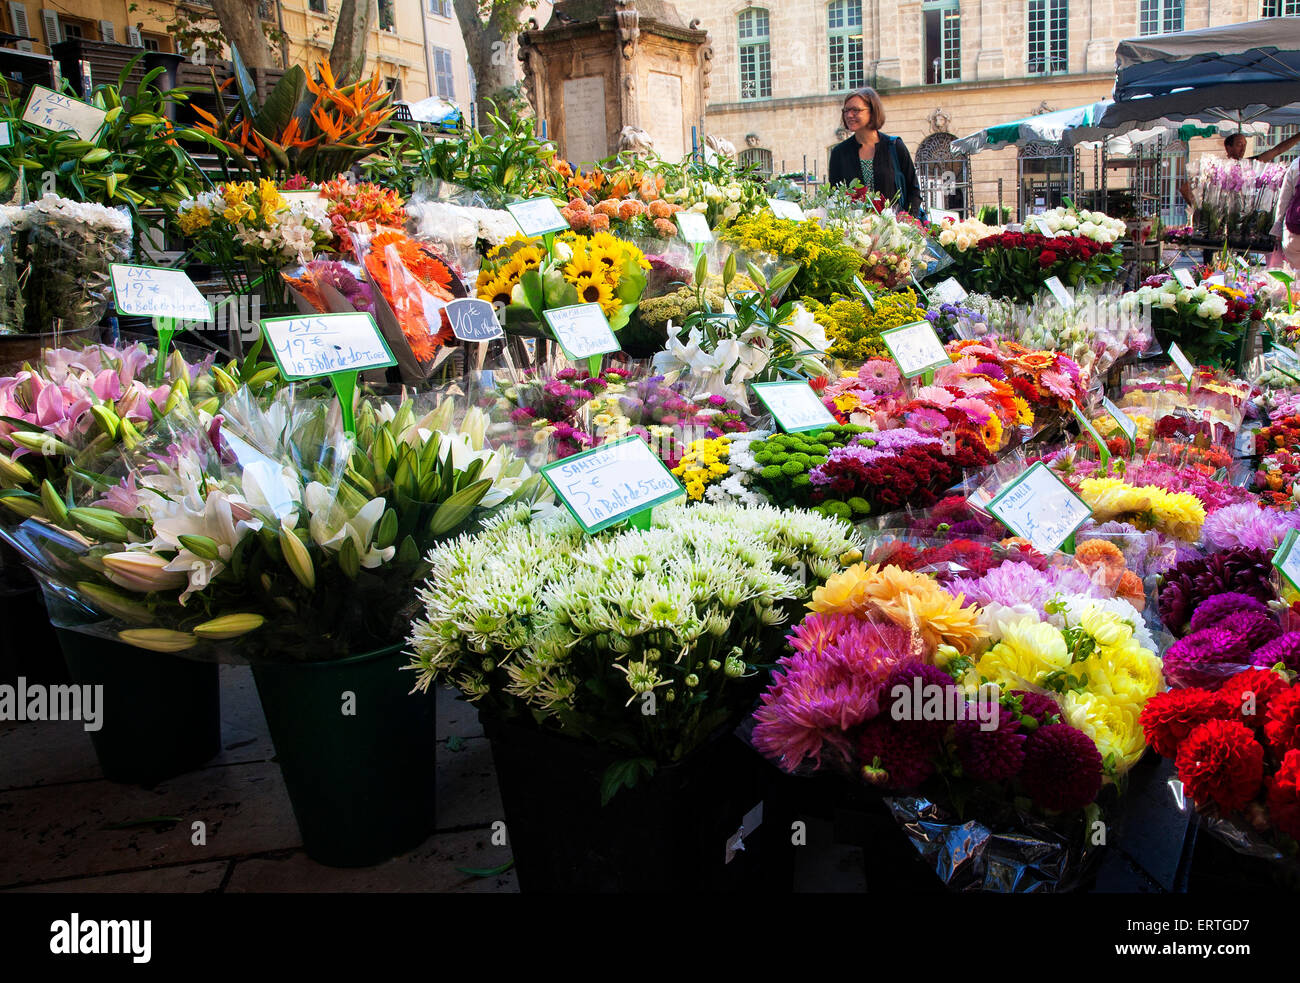 El mercado de las flores de Aix en Provence. Francia. Foto de stock